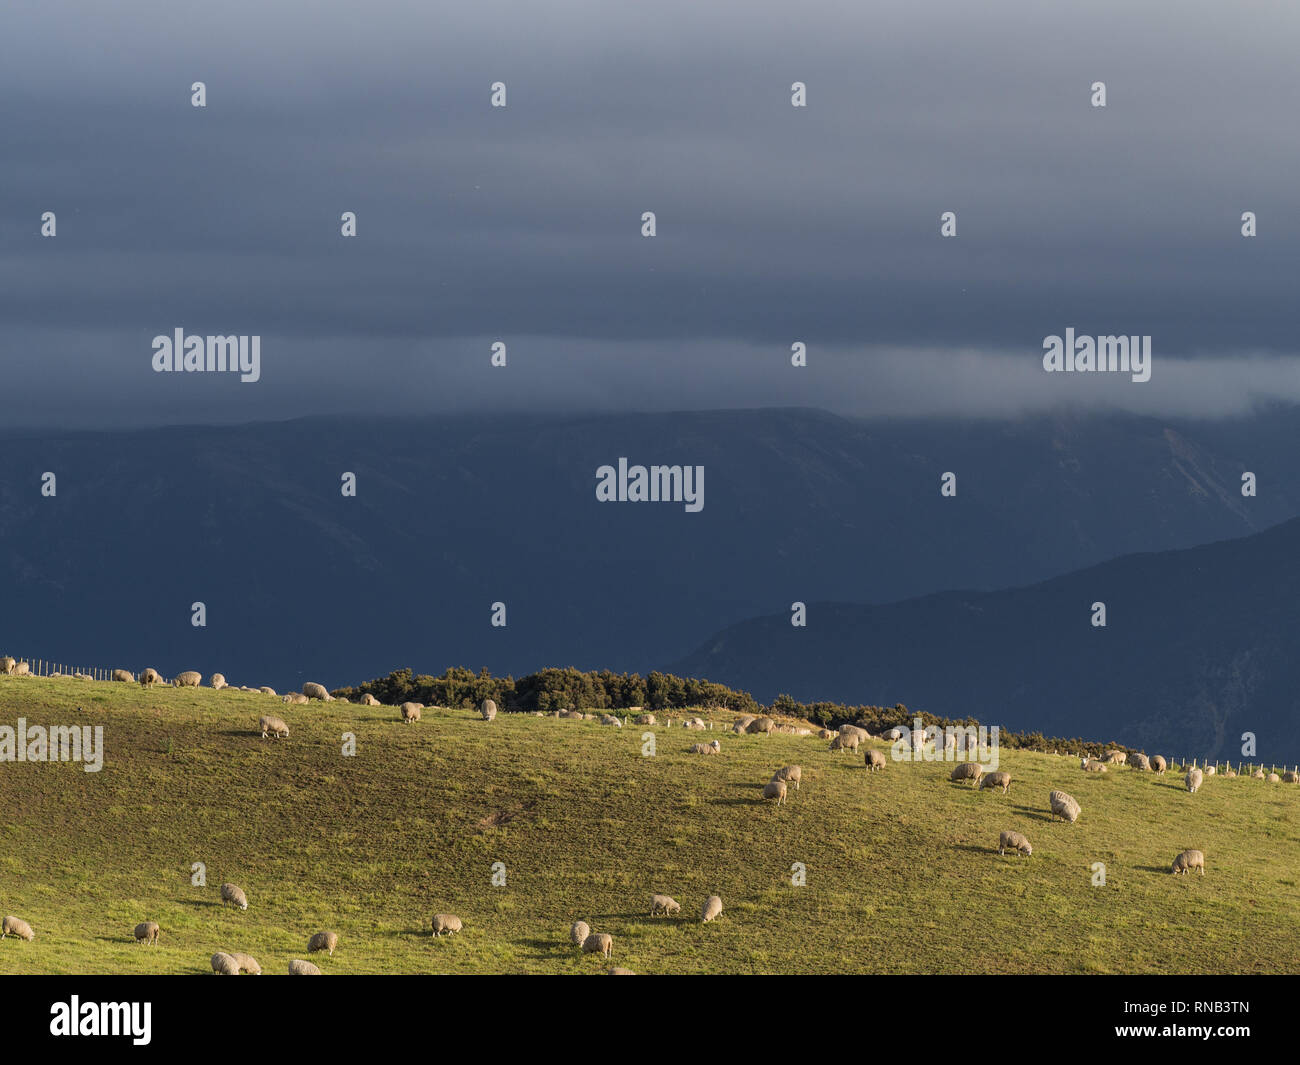 Sheep grazing, view toward Sparrowhawk Range from Taihape Napier Road, Inland Mokai Patea, Central North Island, New Zealand Stock Photo